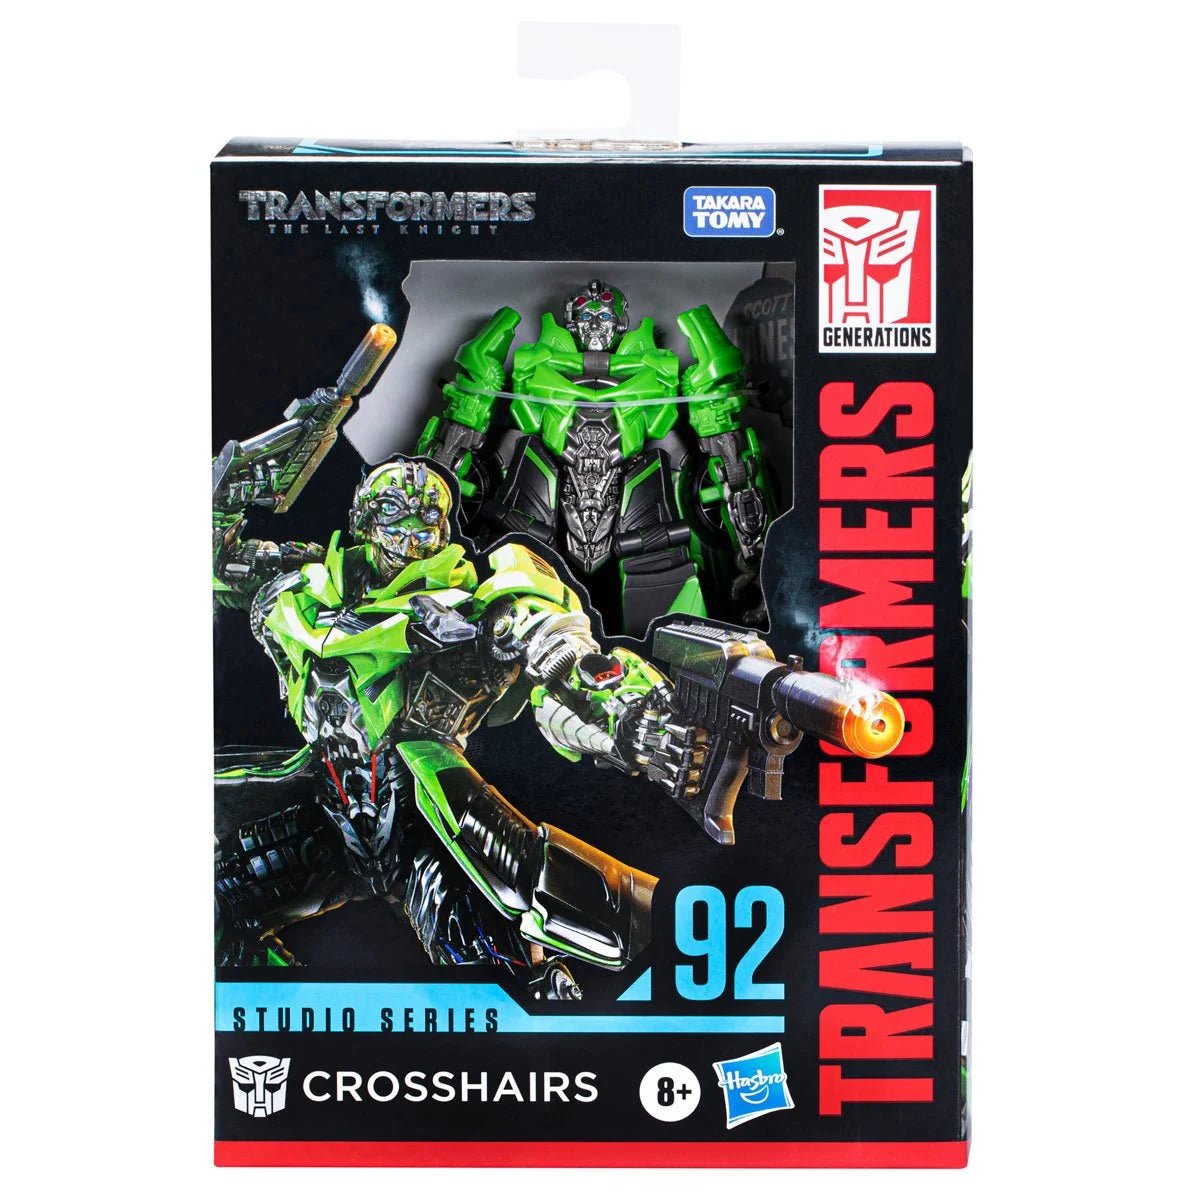 Transformers Studio Series 92 Deluxe Transformers: The Last Knight Crosshairs Hasbro